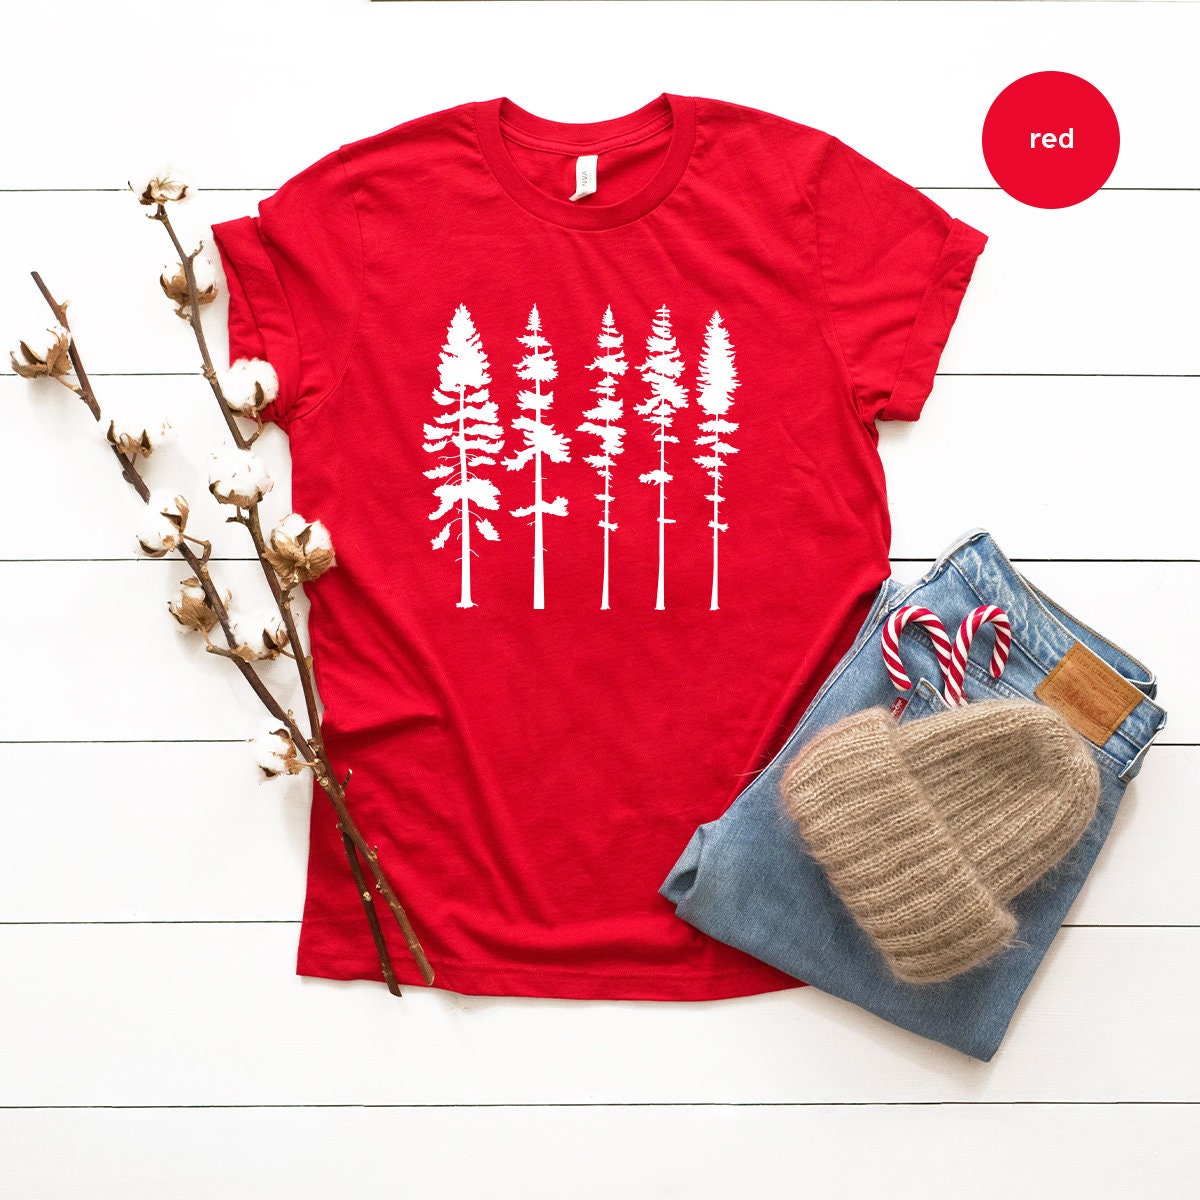 Pine Tree Shirt, Pine Tree T Shirt, Camping Shirt, Hiking Shirt, Adventure Shirts, Nature Lover Gift, Outdoors Shirt - Fastdeliverytees.com